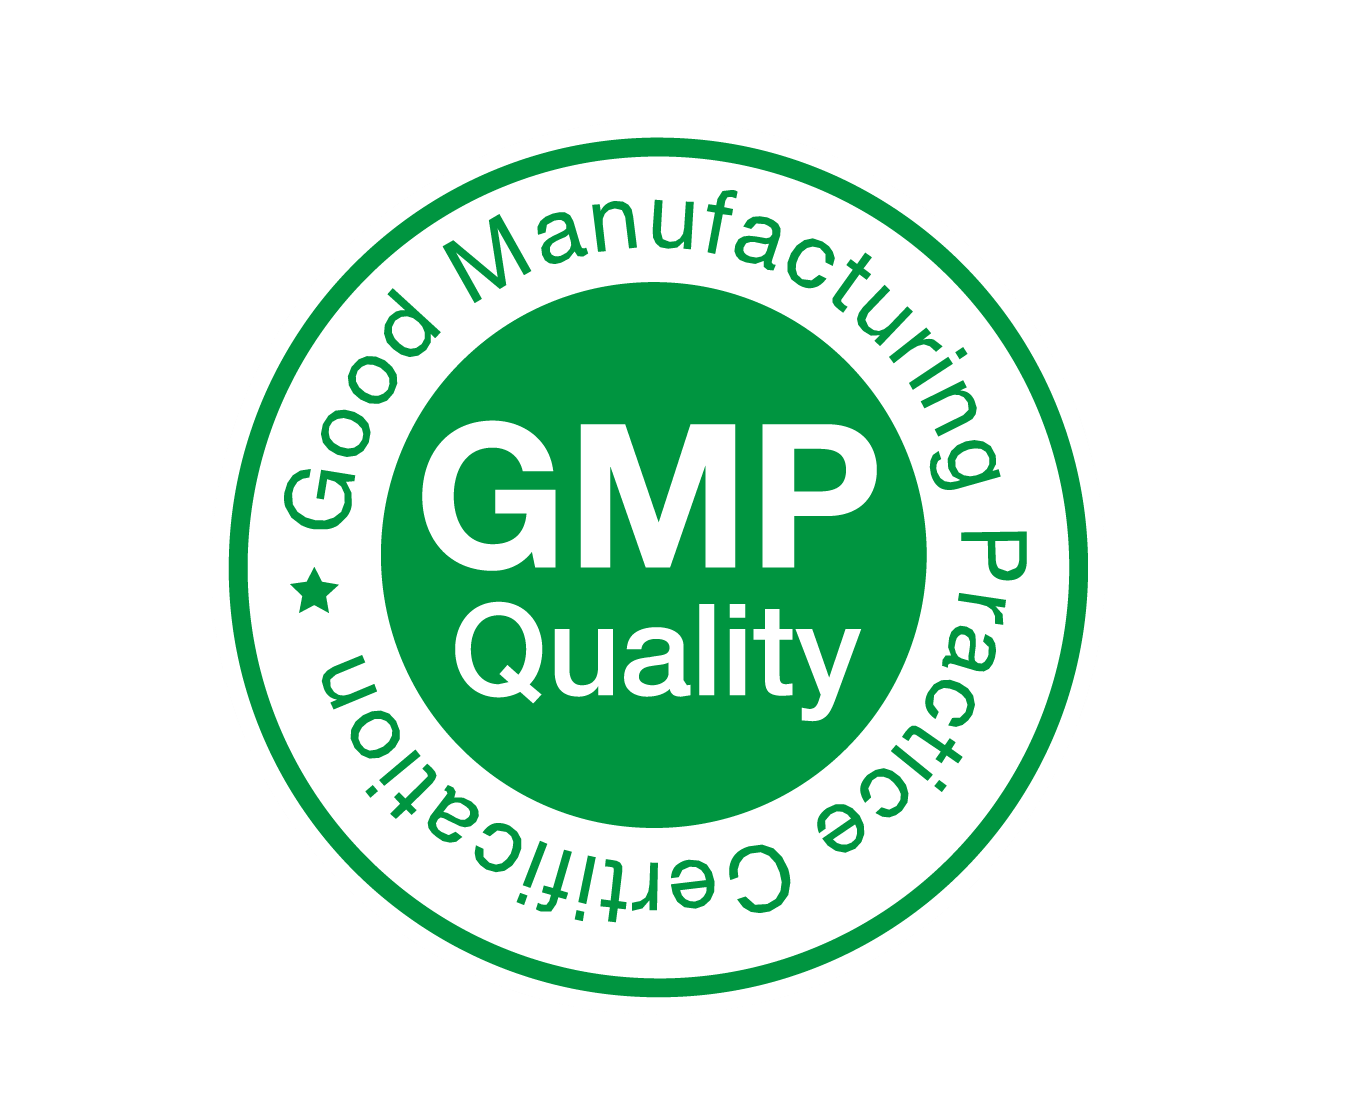 Certified GMP Logo PNG imagen de alta calidad